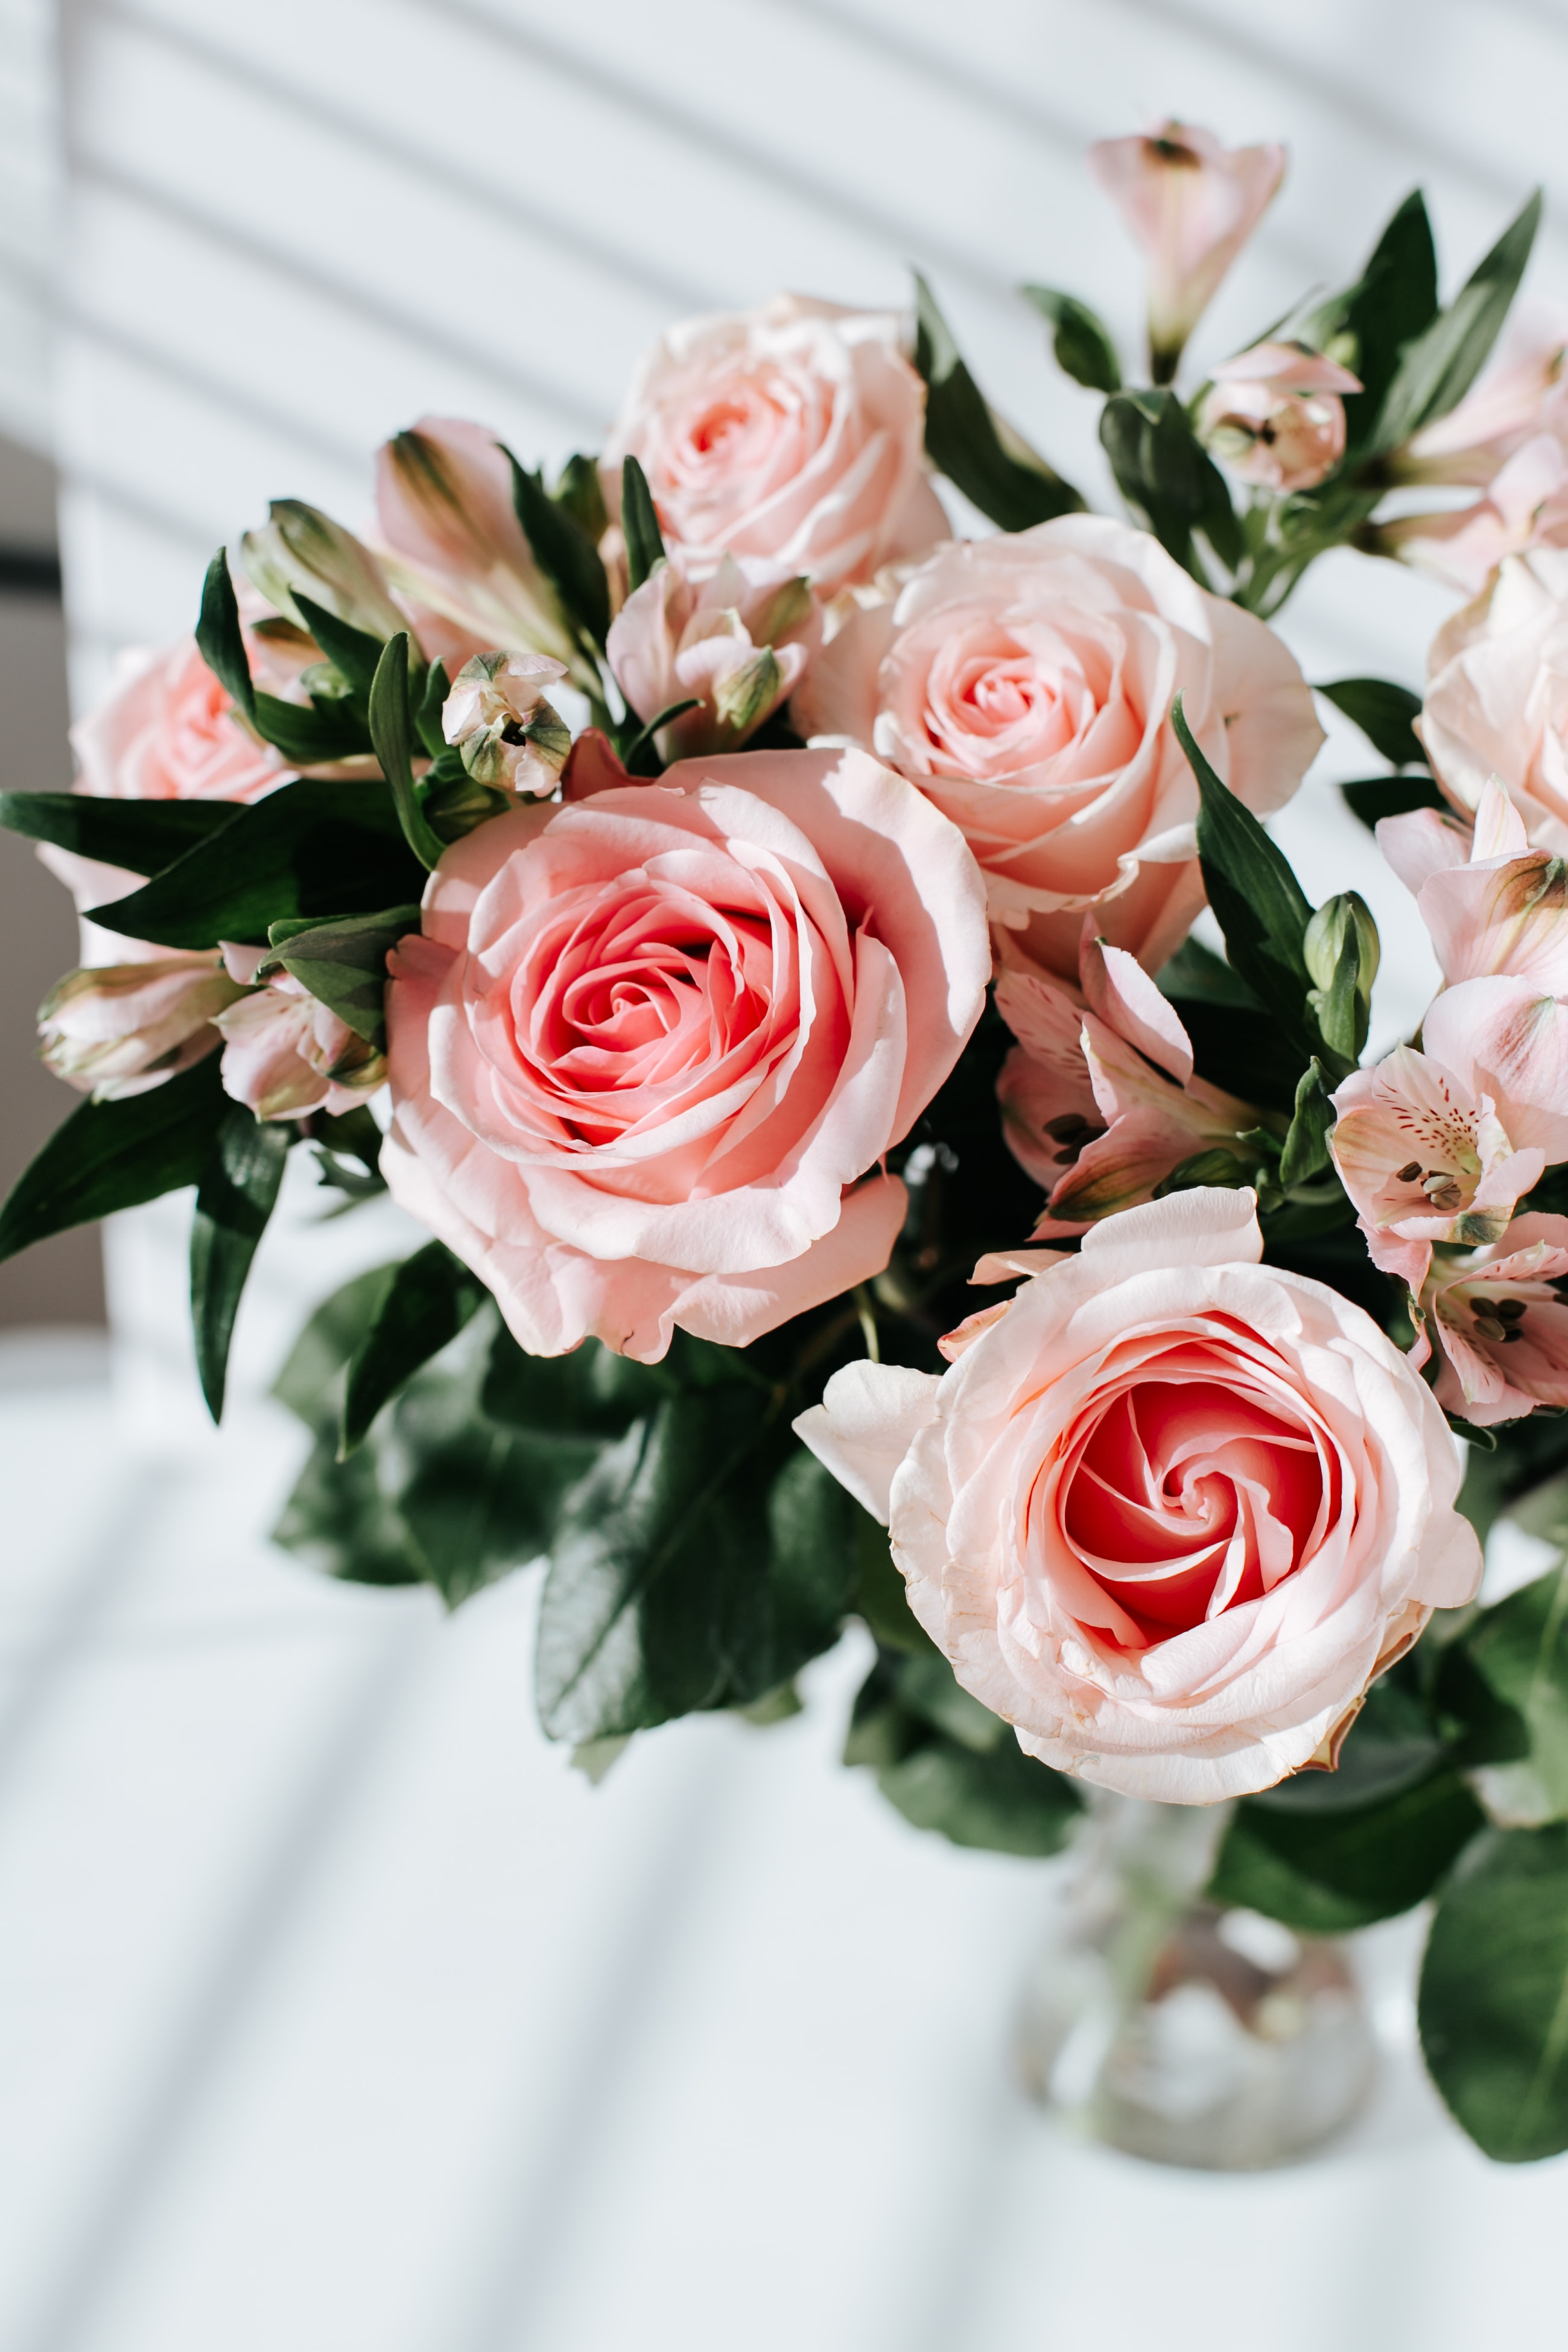 bouquet, flowers, roses, lilies cellphone